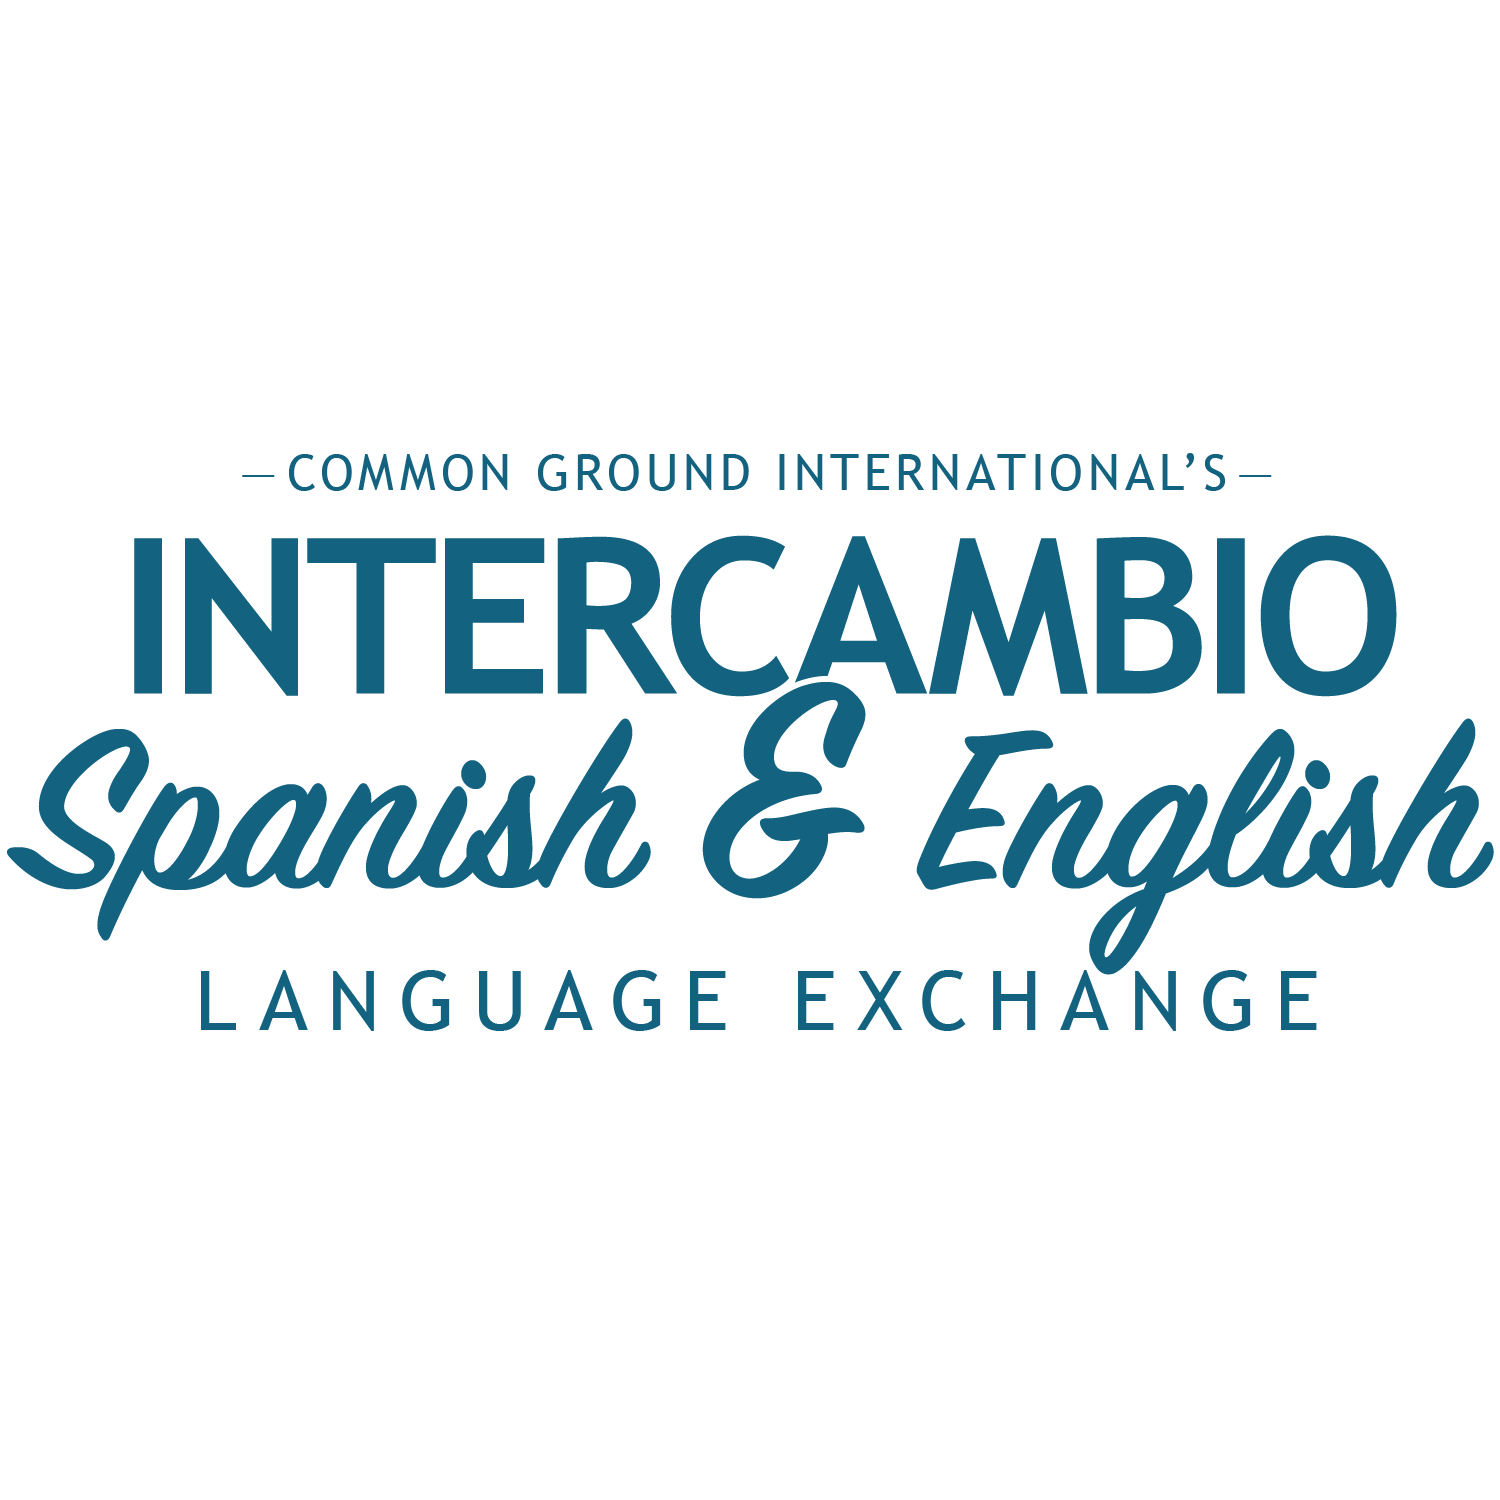 Intercambio Spanish & English Language Exchange